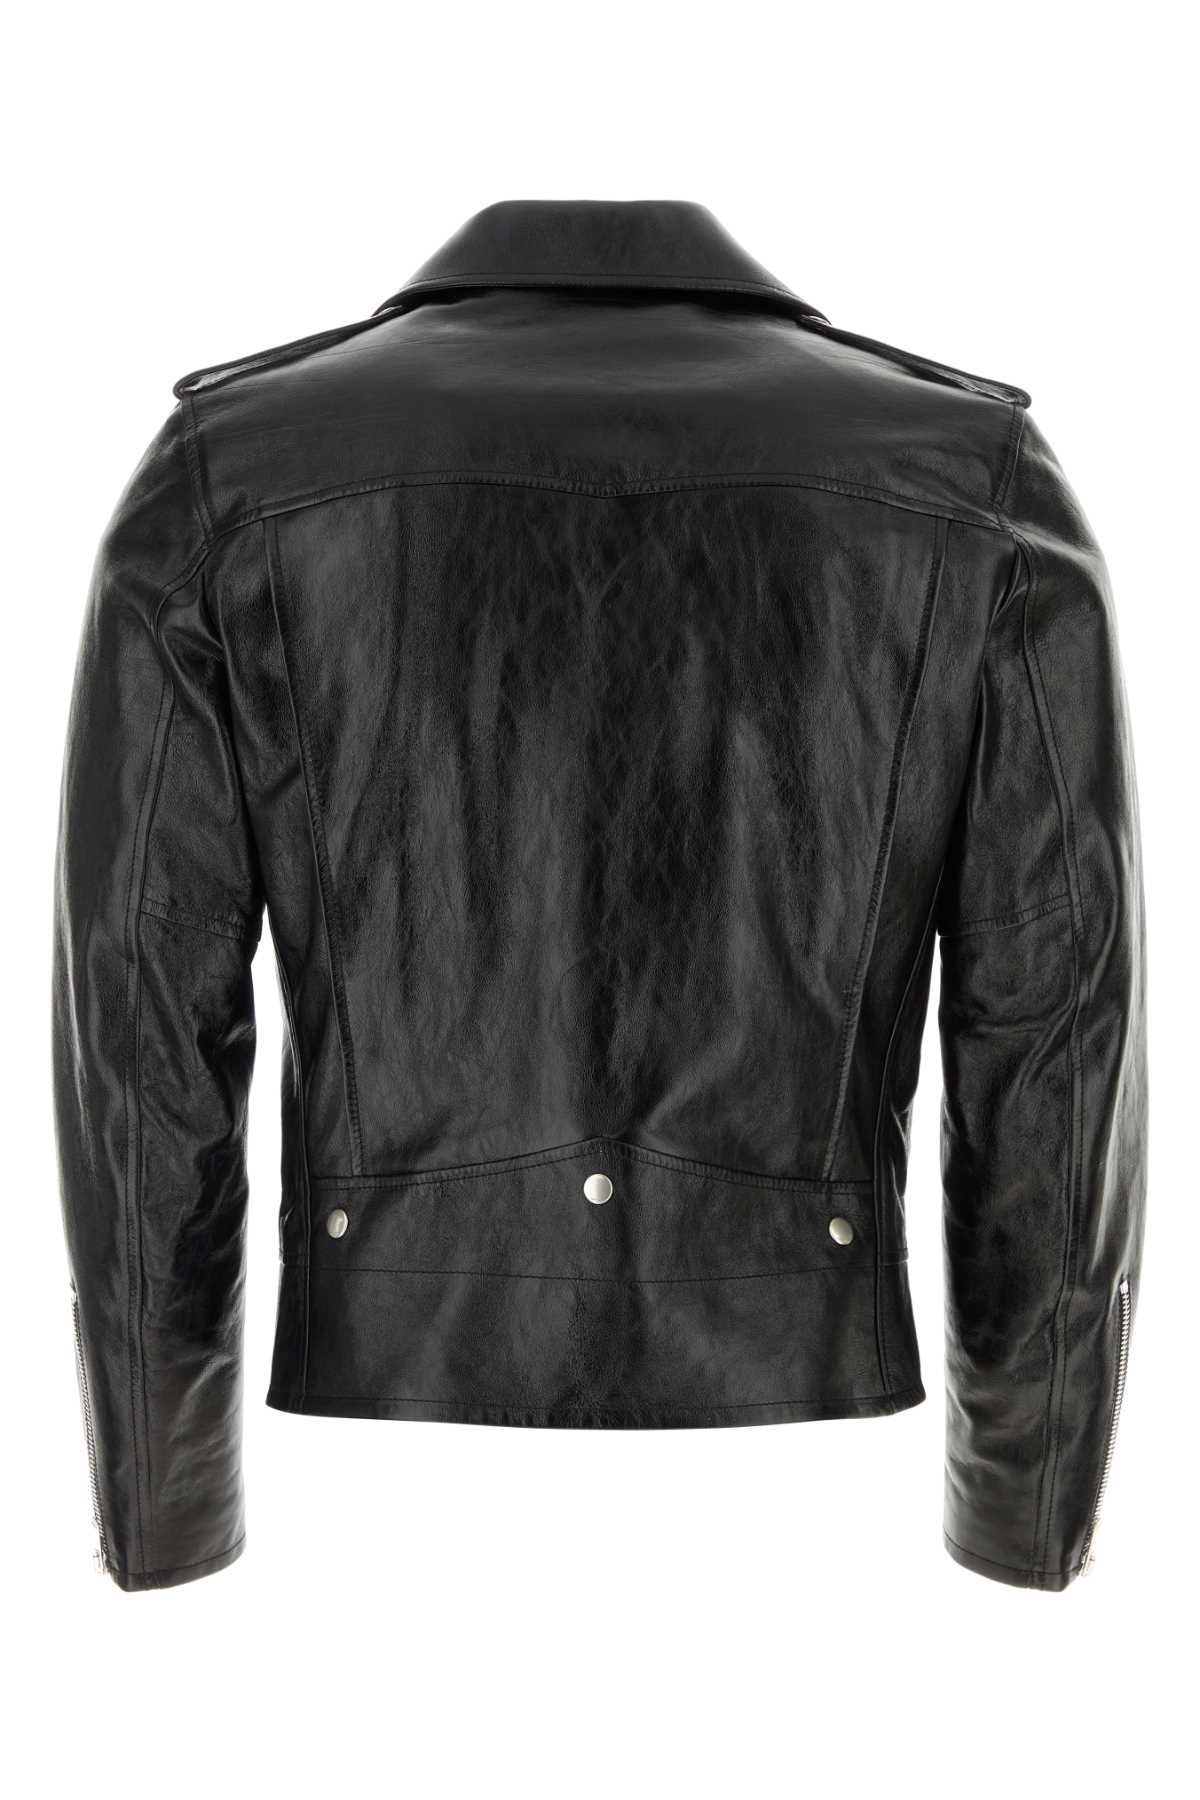 Saint Laurent Black Leather Jacket In 1000